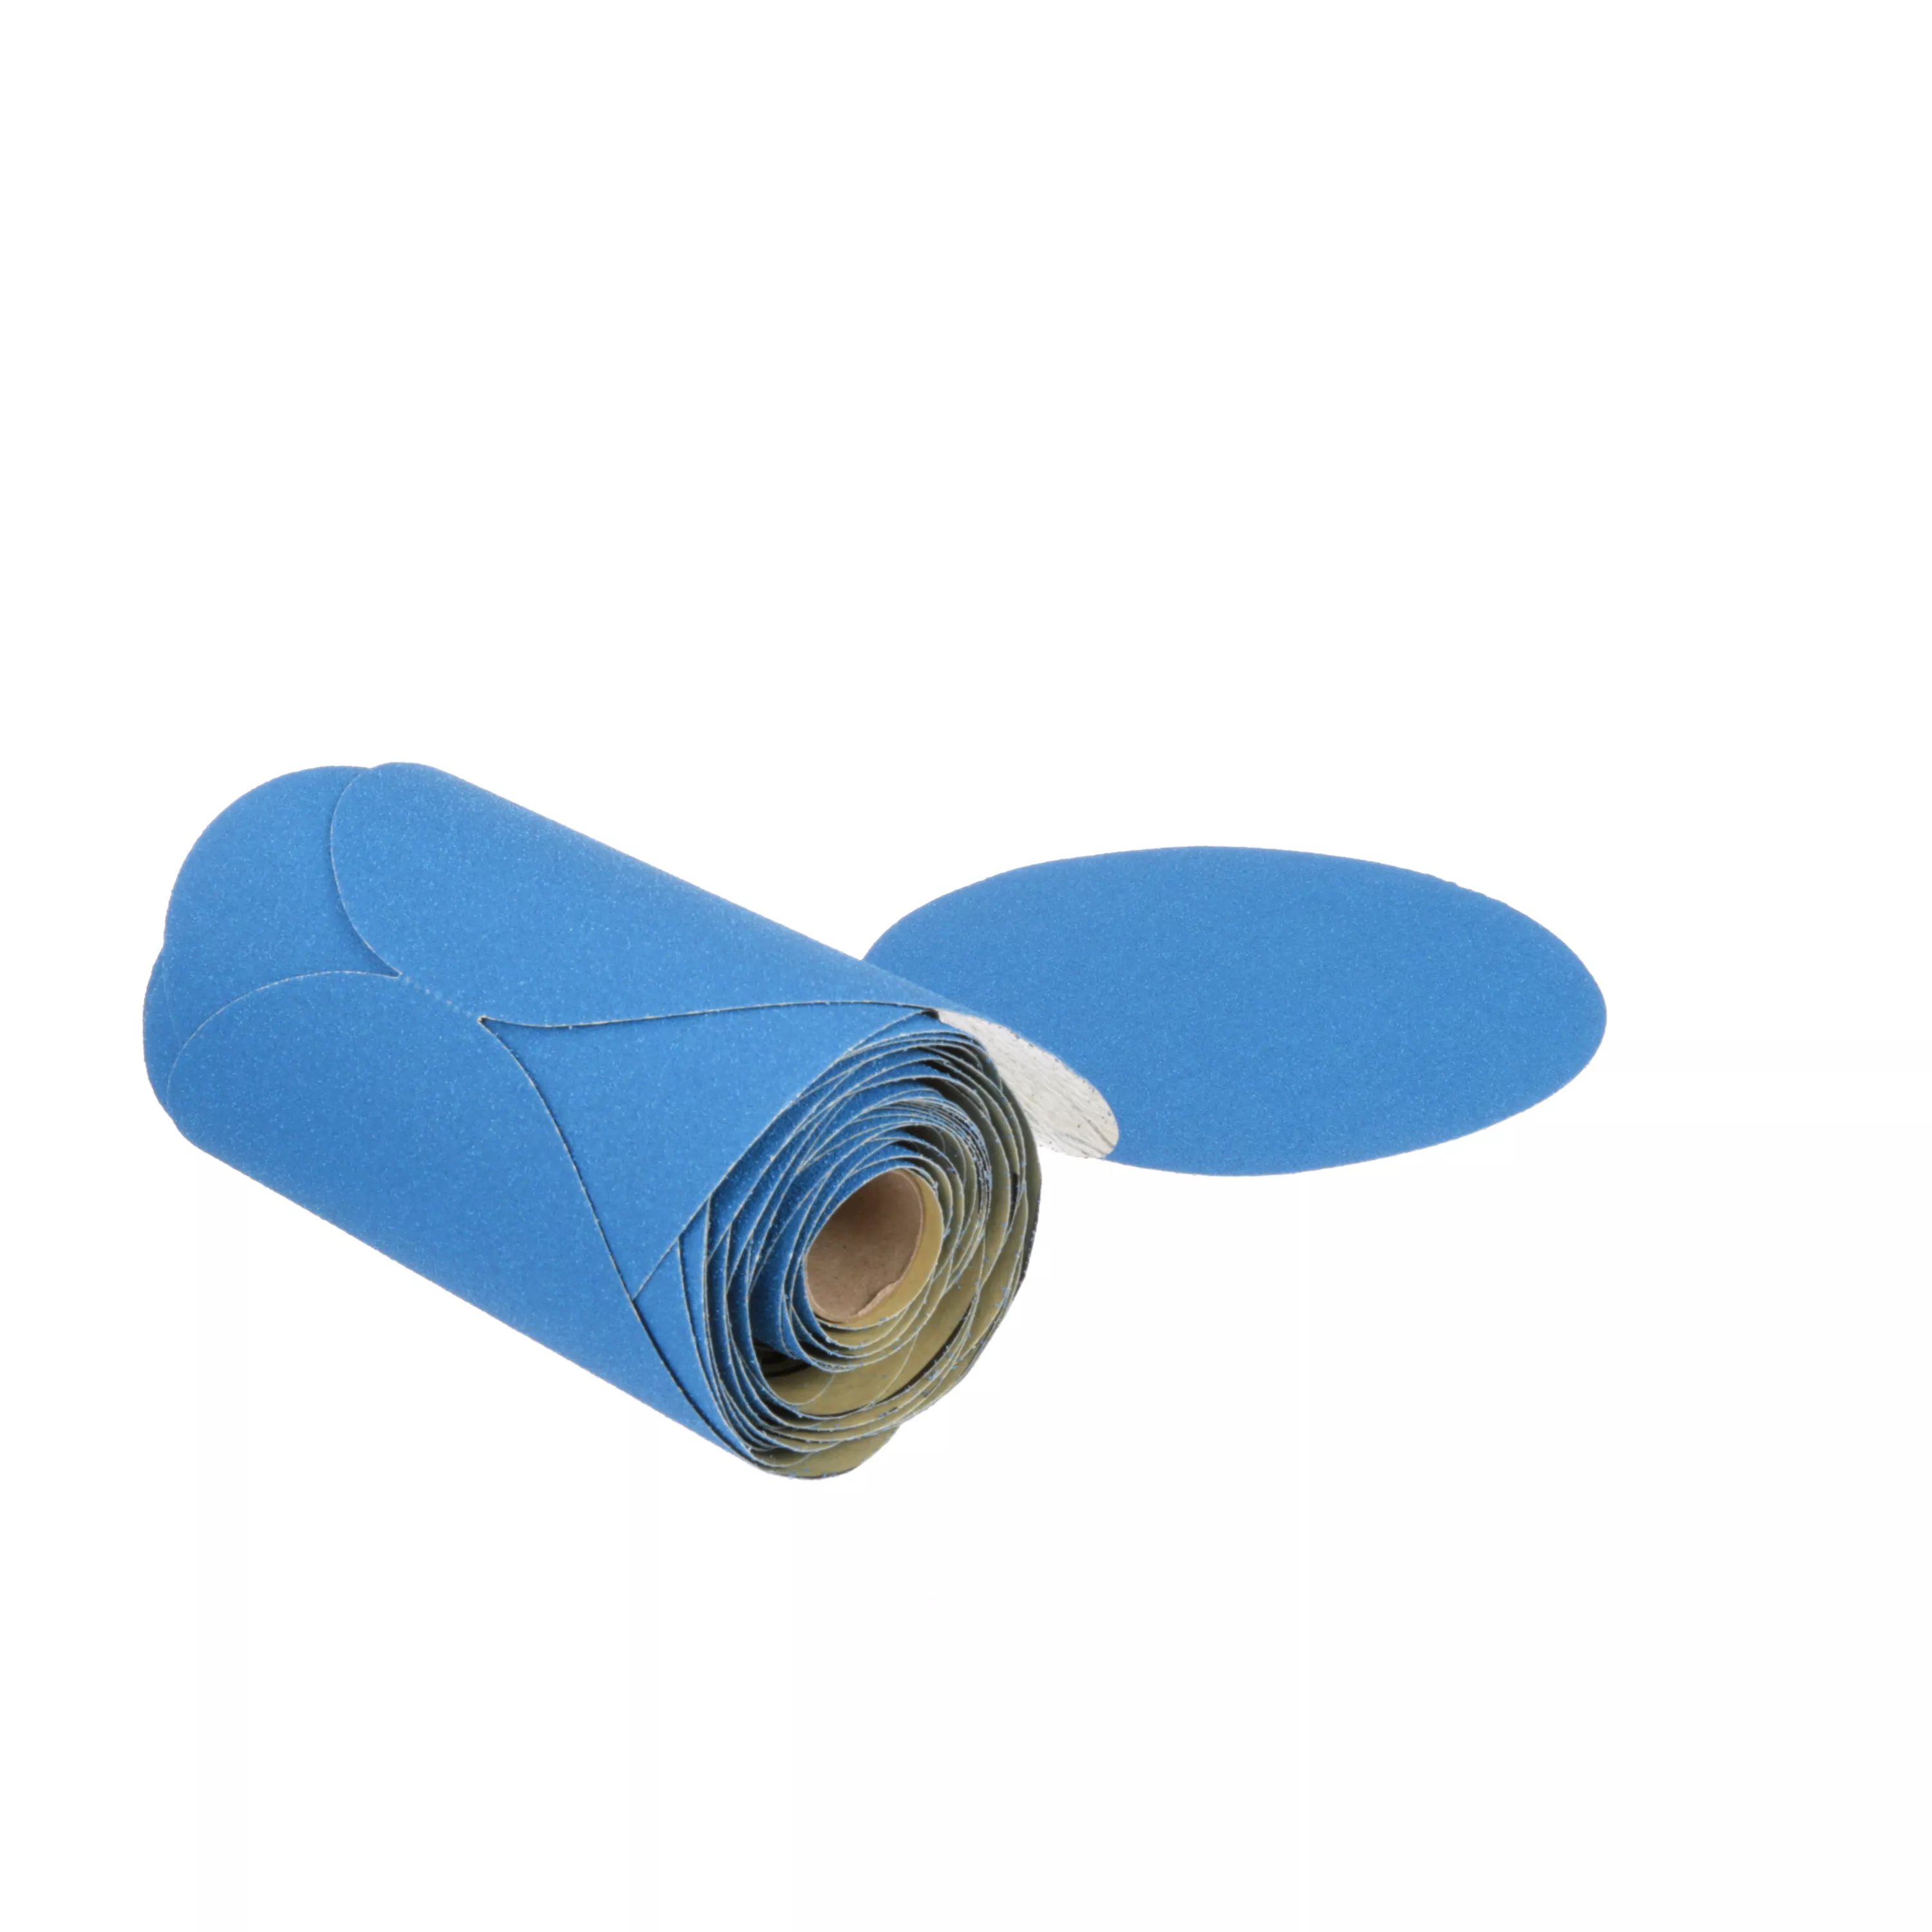 SKU 7100098232 | 3M™ Stikit™ Blue Abrasive Disc Roll